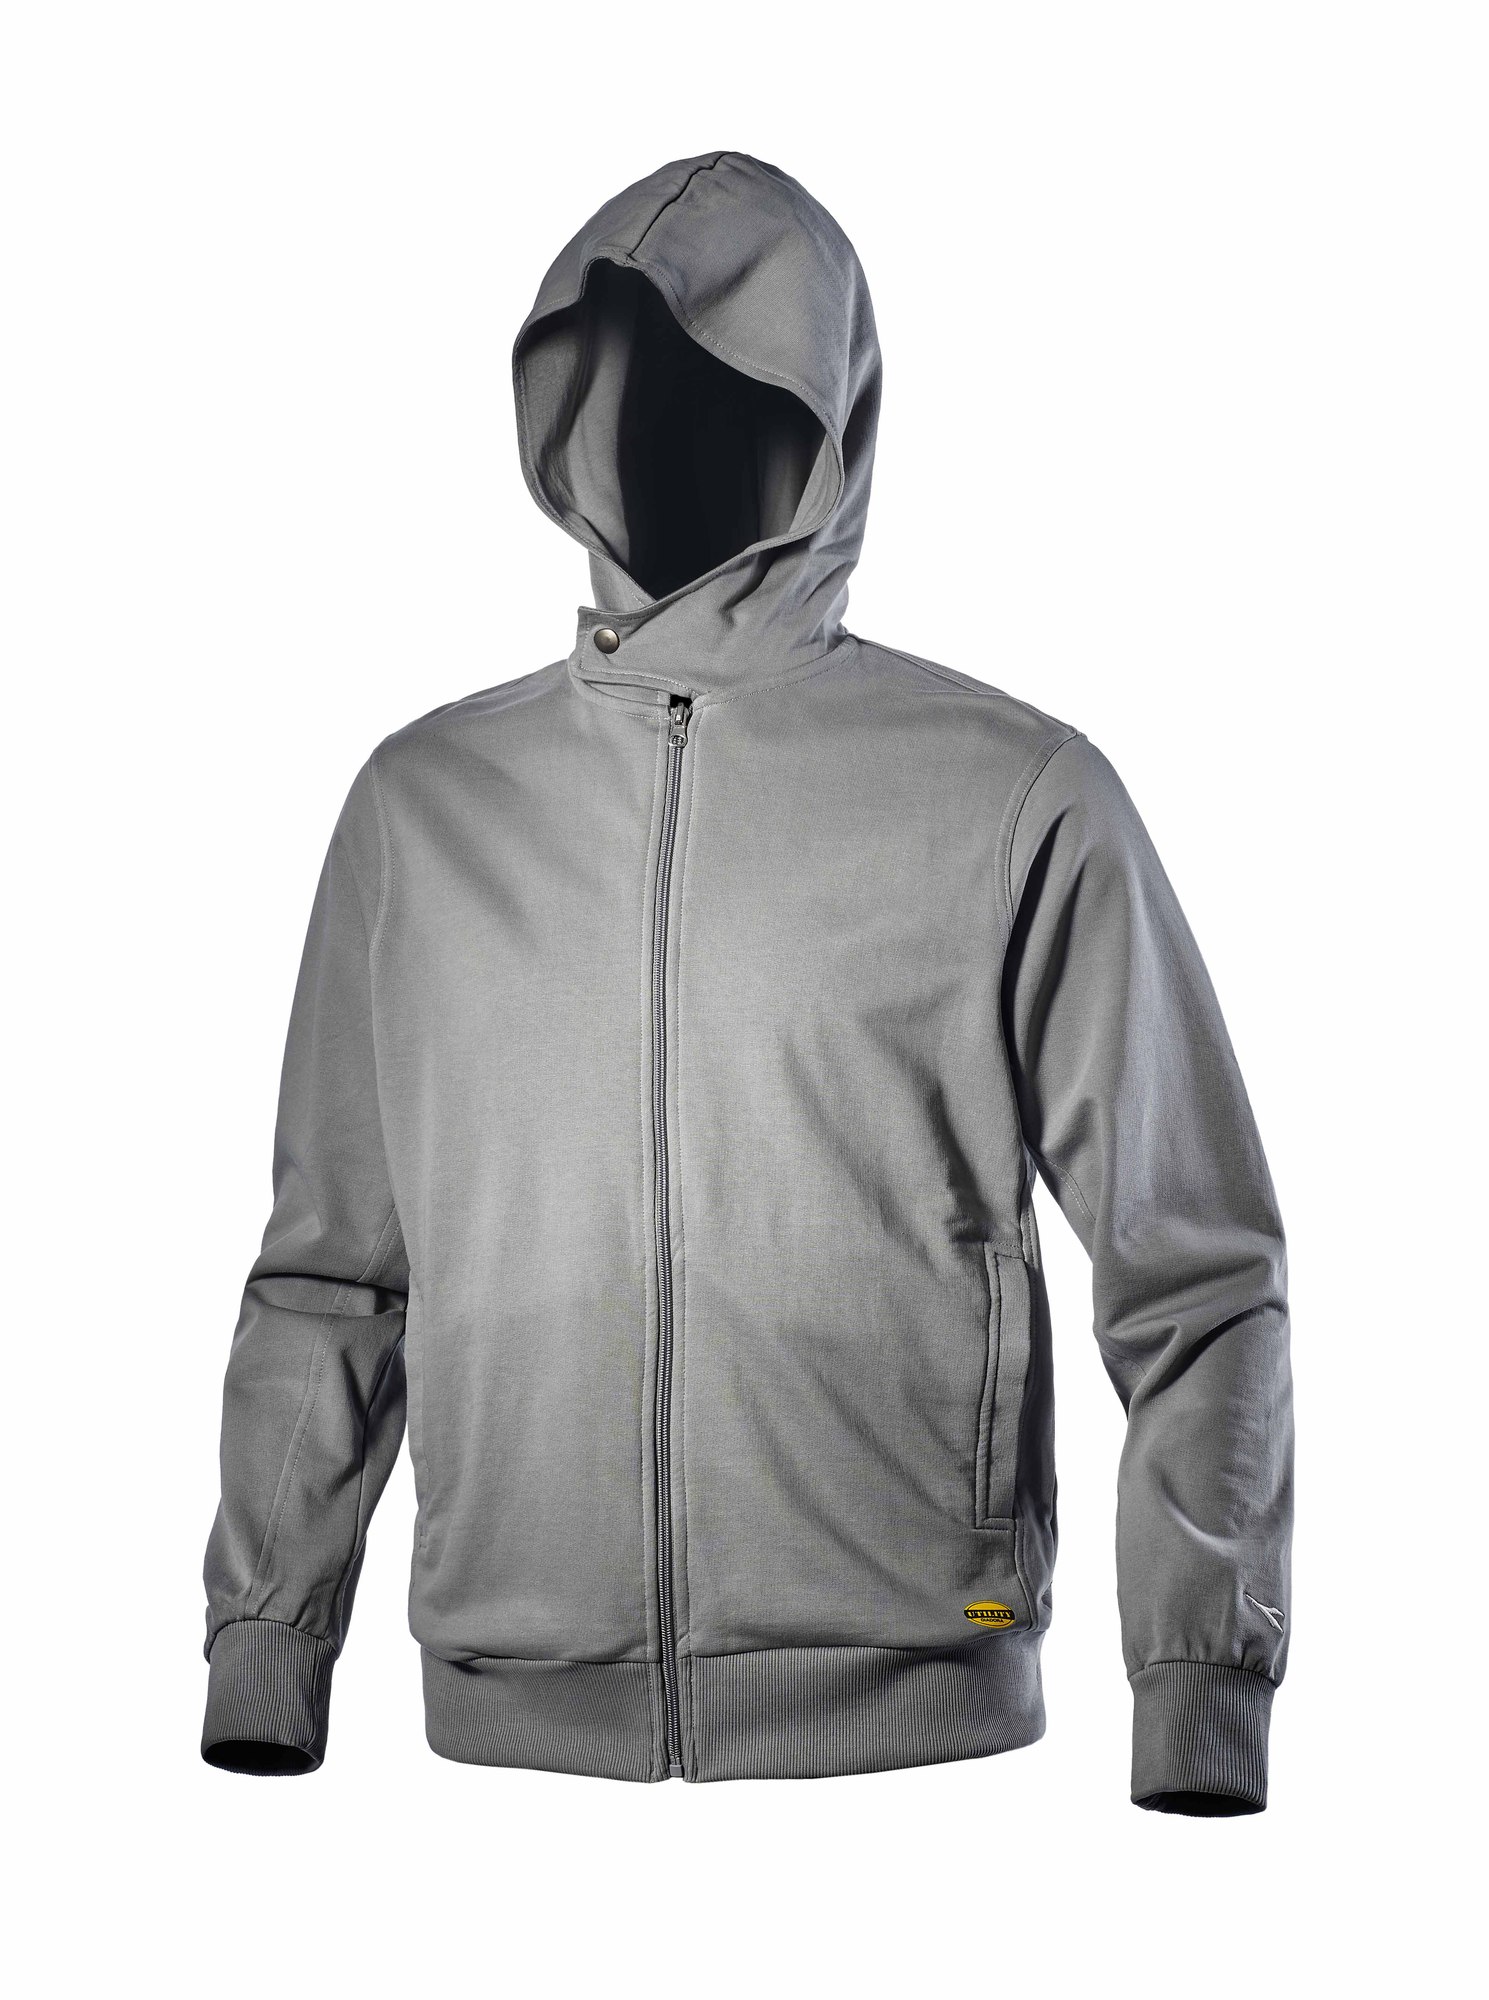 Sweatshirt THUNDER gris TXL - DIADORA SPA - 702.157767.XL